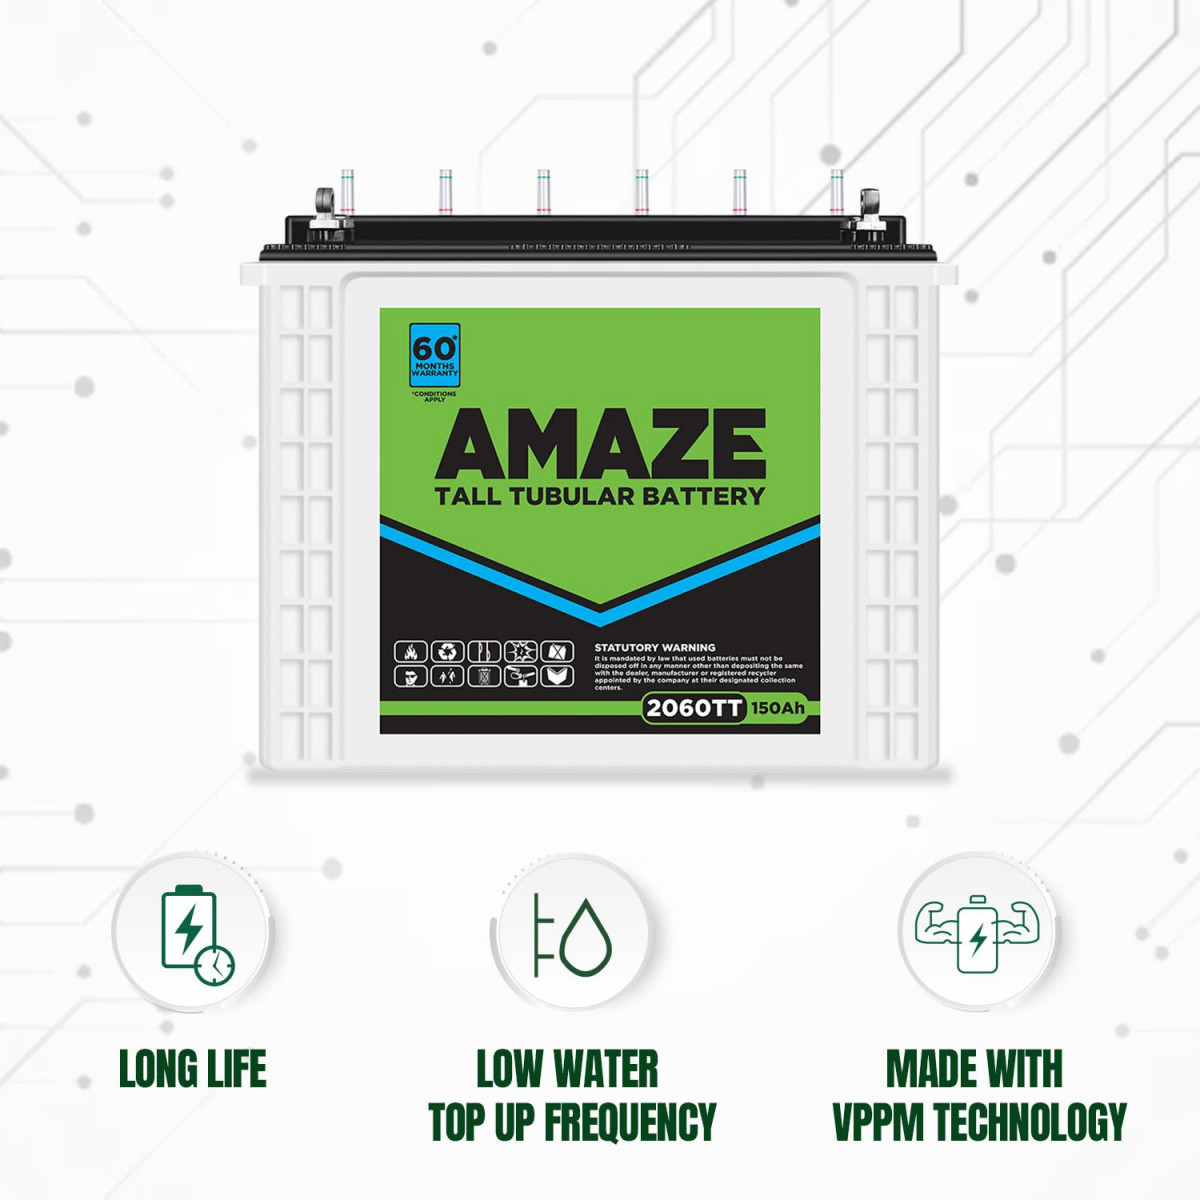 Amaze 2060TT 150Ah Tall Tubular Battery for Home Office  Shops